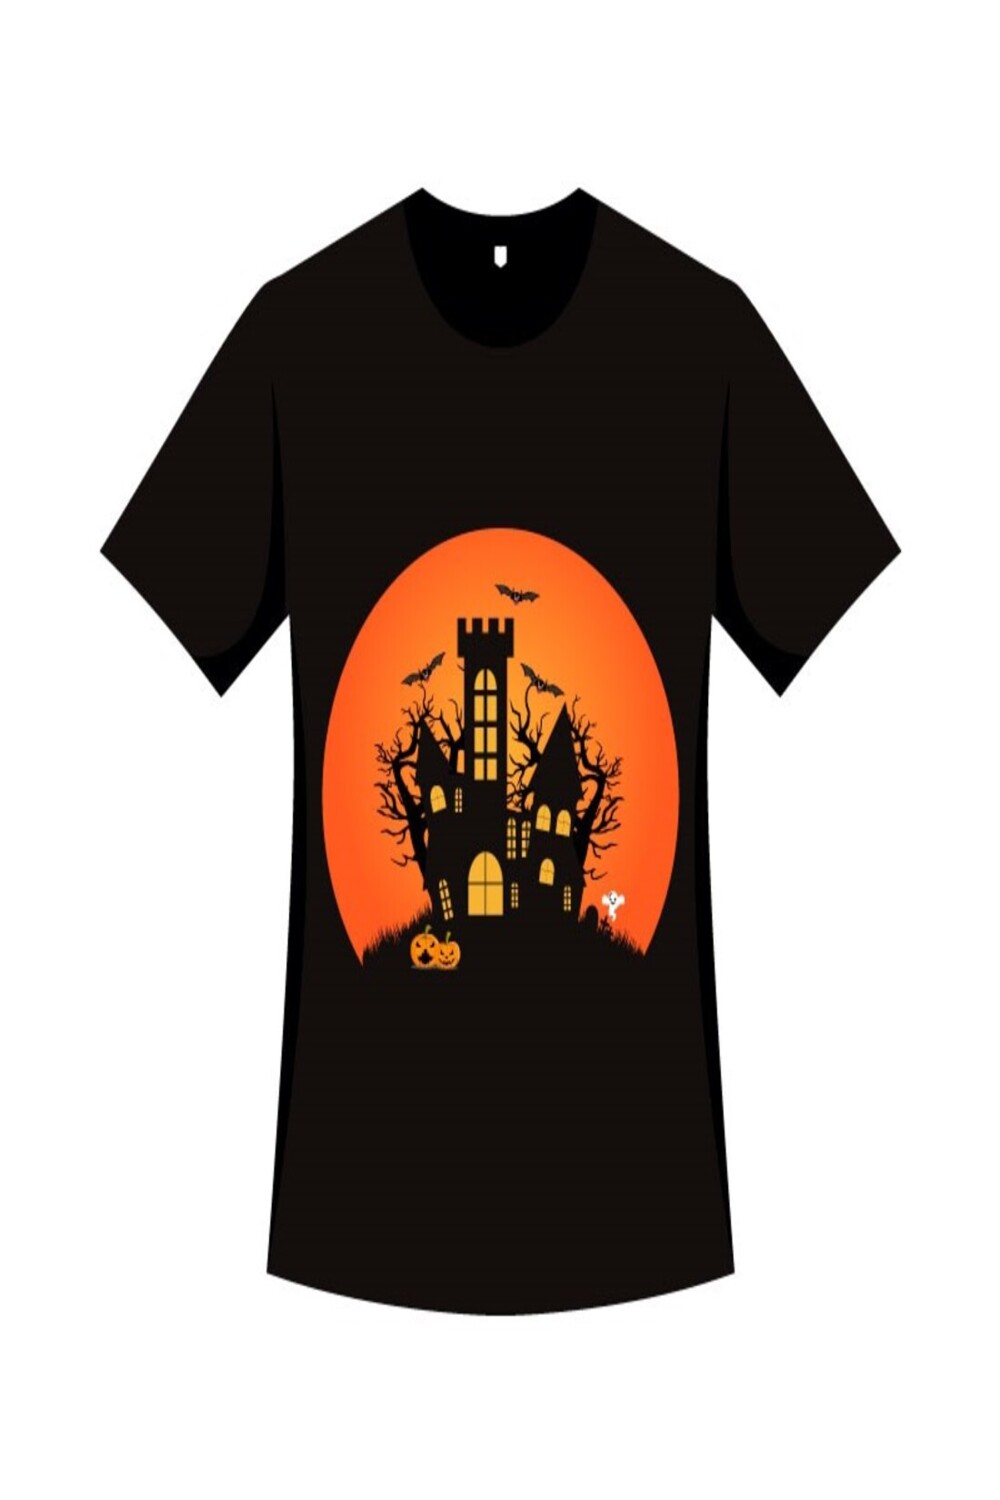 T-shirt Design for Halloween Events pinterest image.